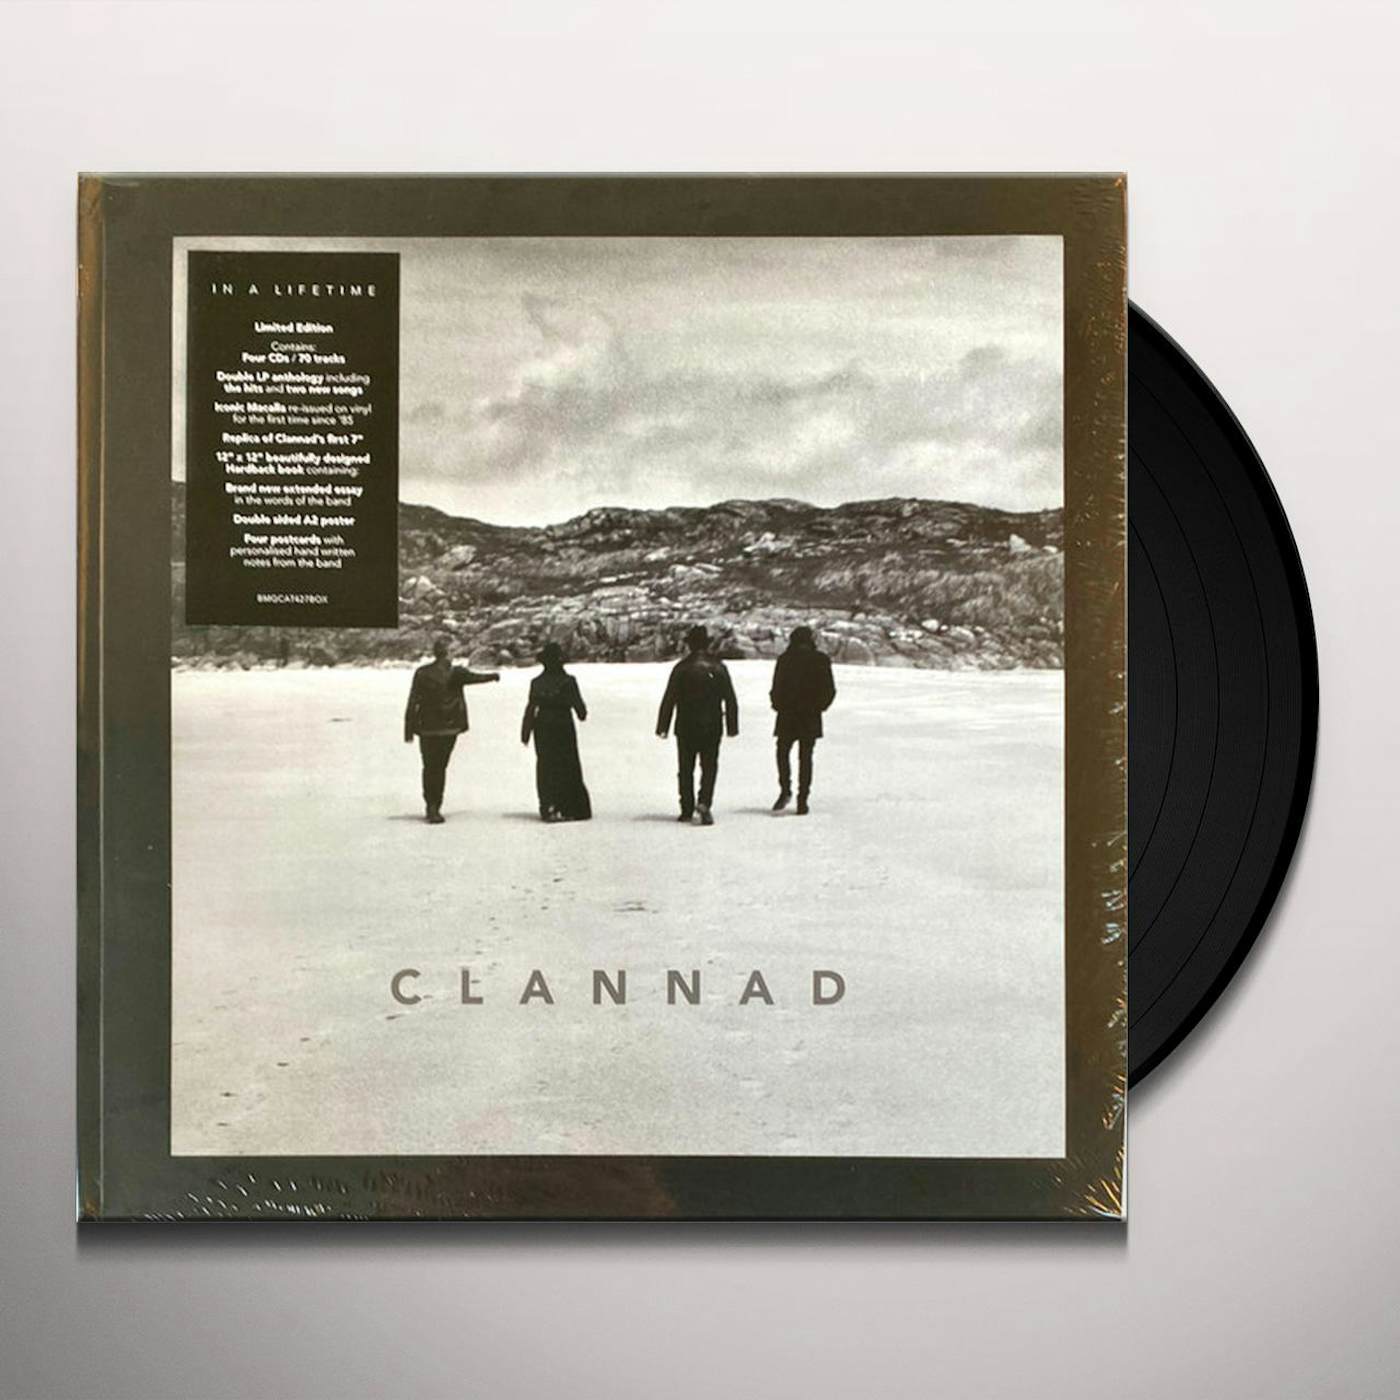  CLANNAD Original SoundTrack : CDs & Vinyl